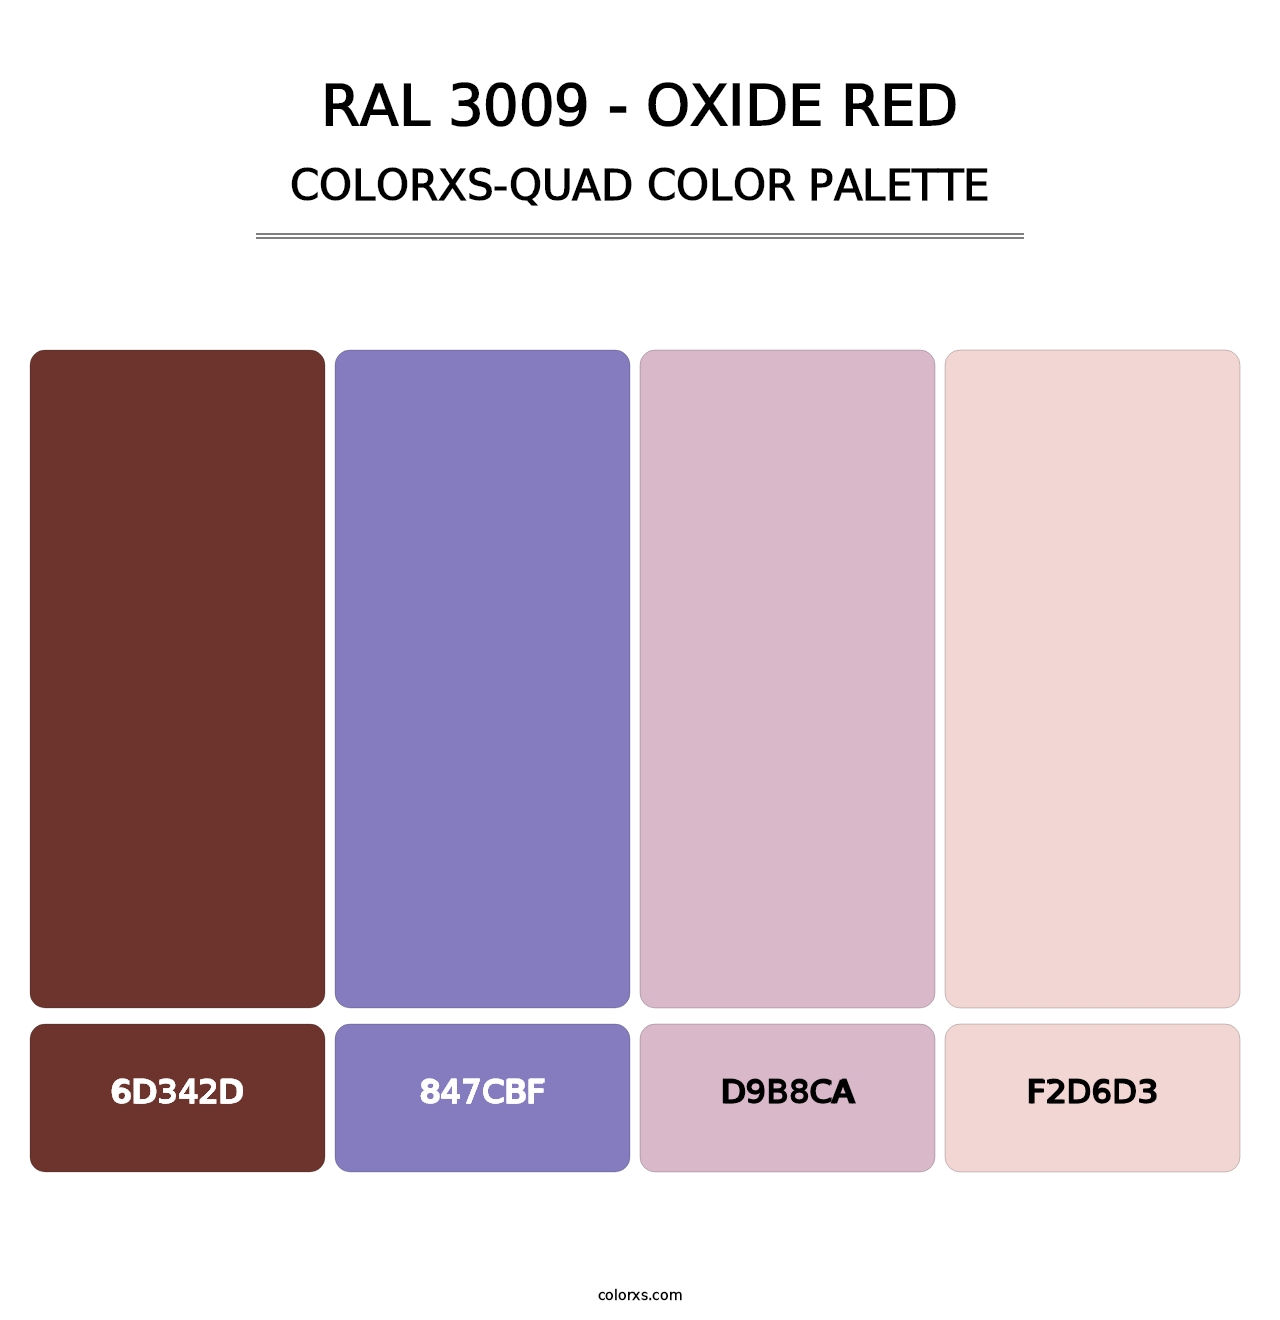 RAL 3009 - Oxide Red - Colorxs Quad Palette